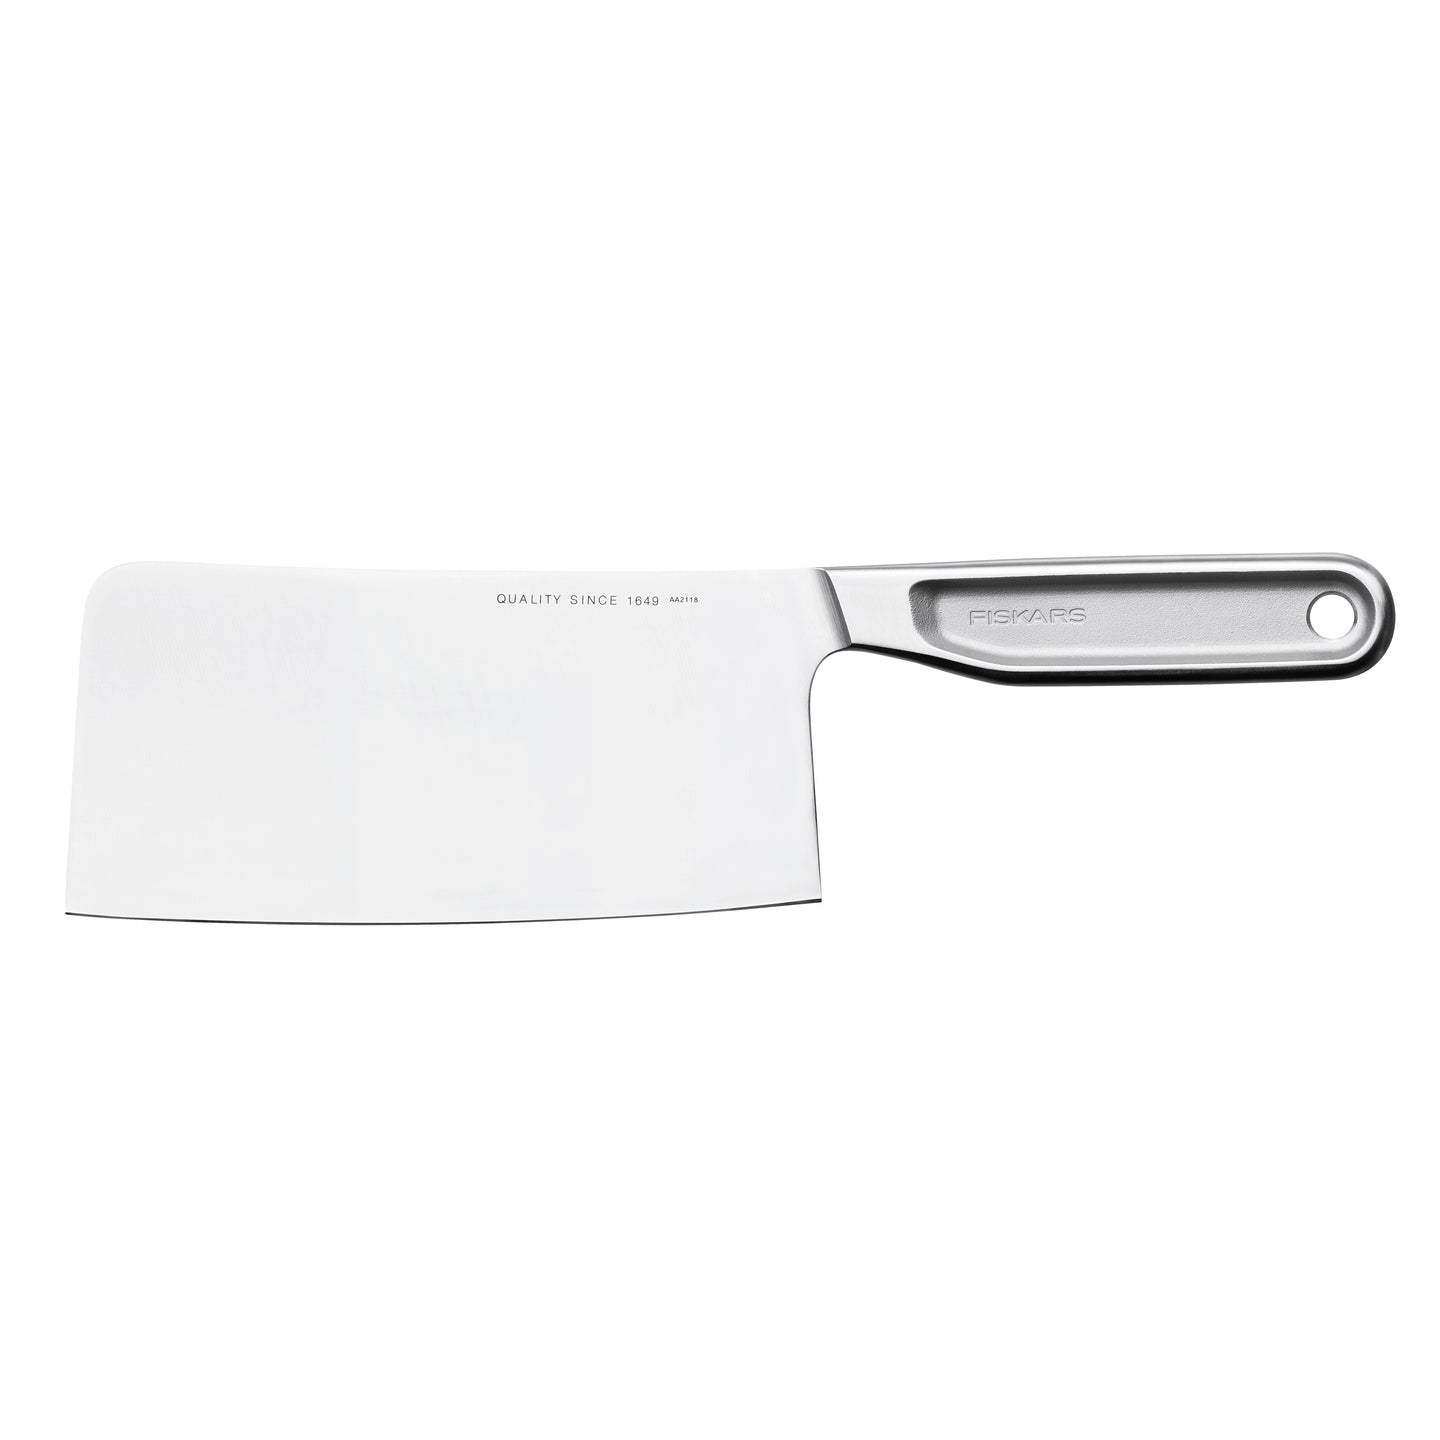 All Steel cleaver knife 16cm - fiskars - Bluecashew Kitchen Homestead